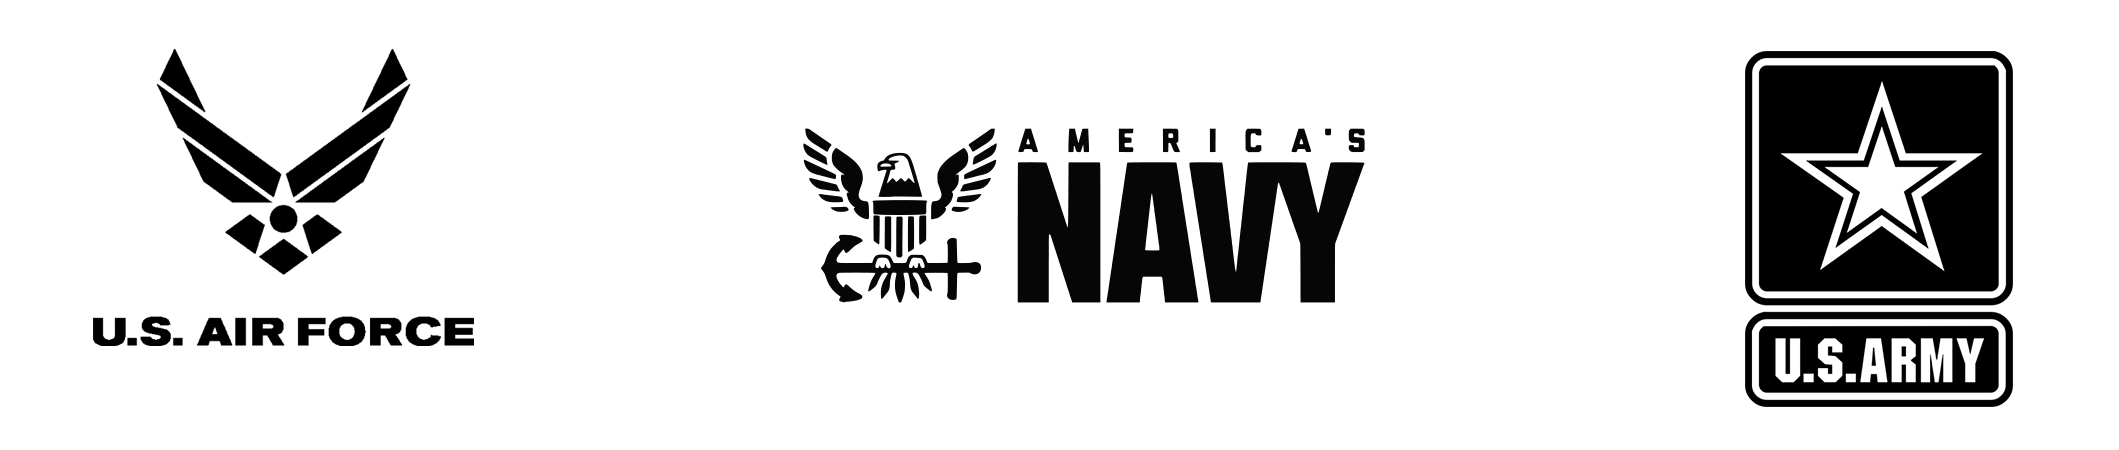 airforce-navy-army-logos-2